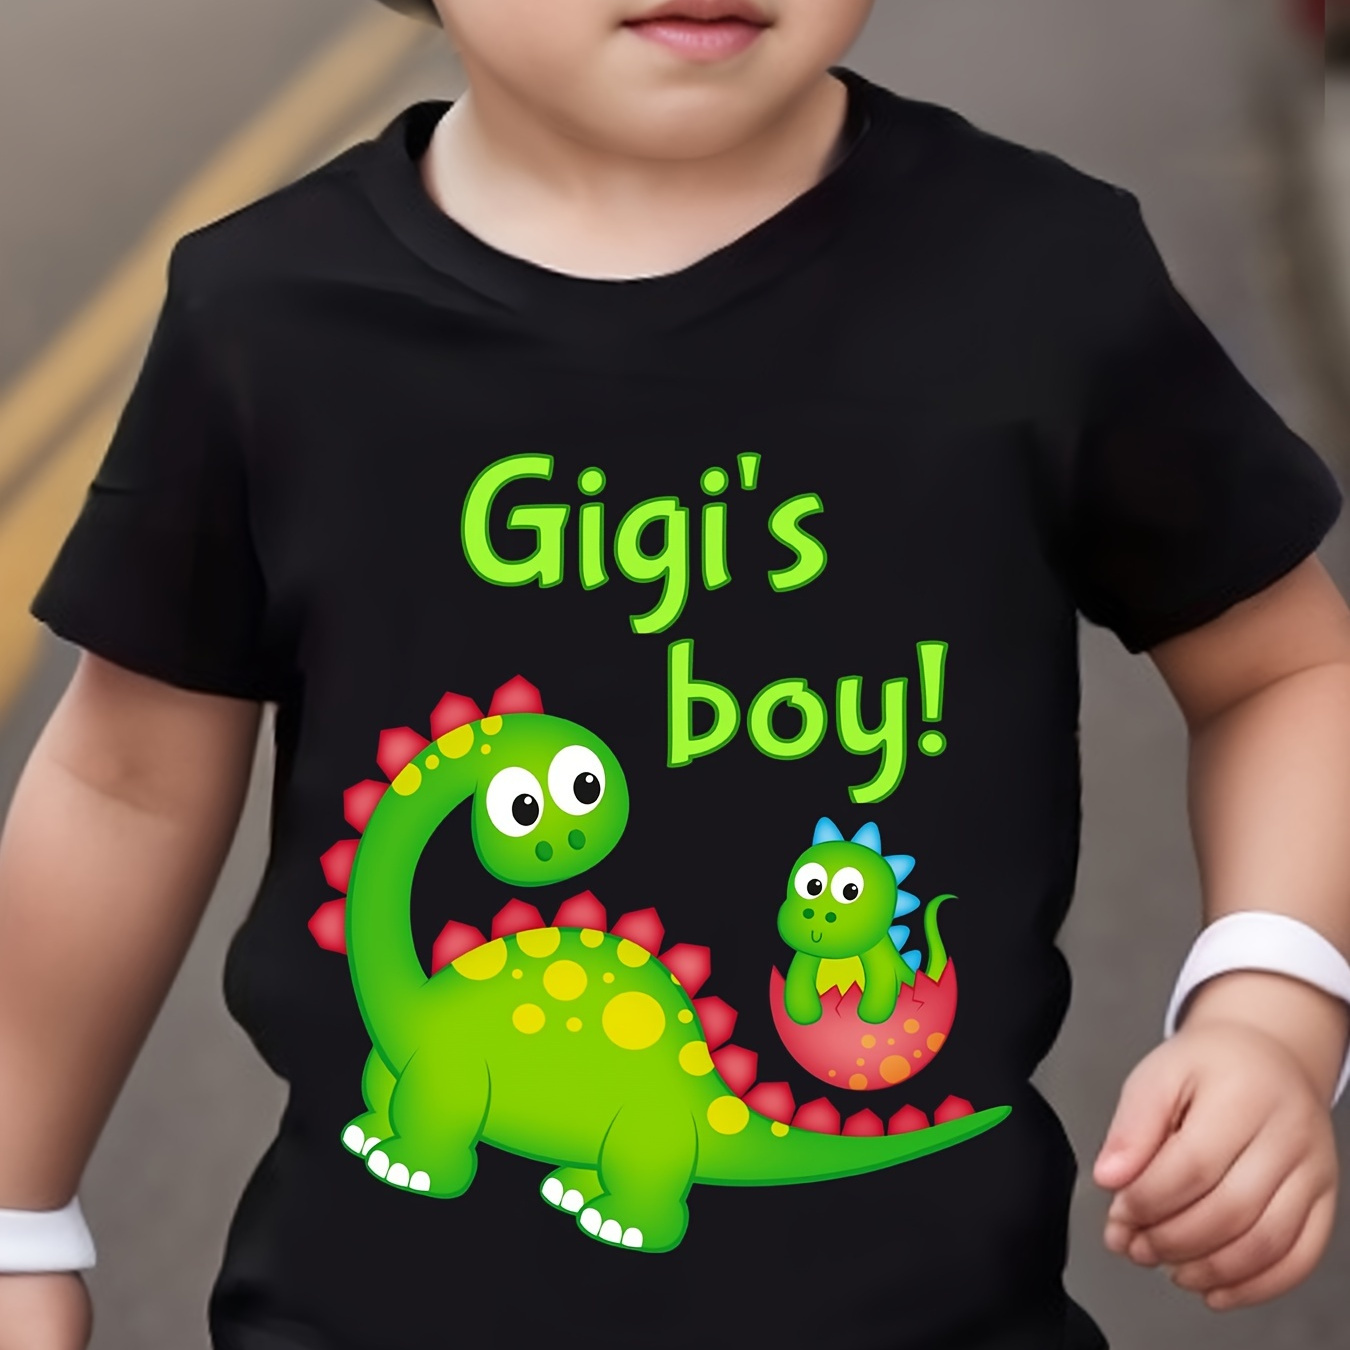 

Cartoon Dinosaur And Gigi's Boy Letter Print Boys Creative T-shirt, Casual Lightweight Comfy Short Sleeve Tee Tops, Kids Clothes For Summer